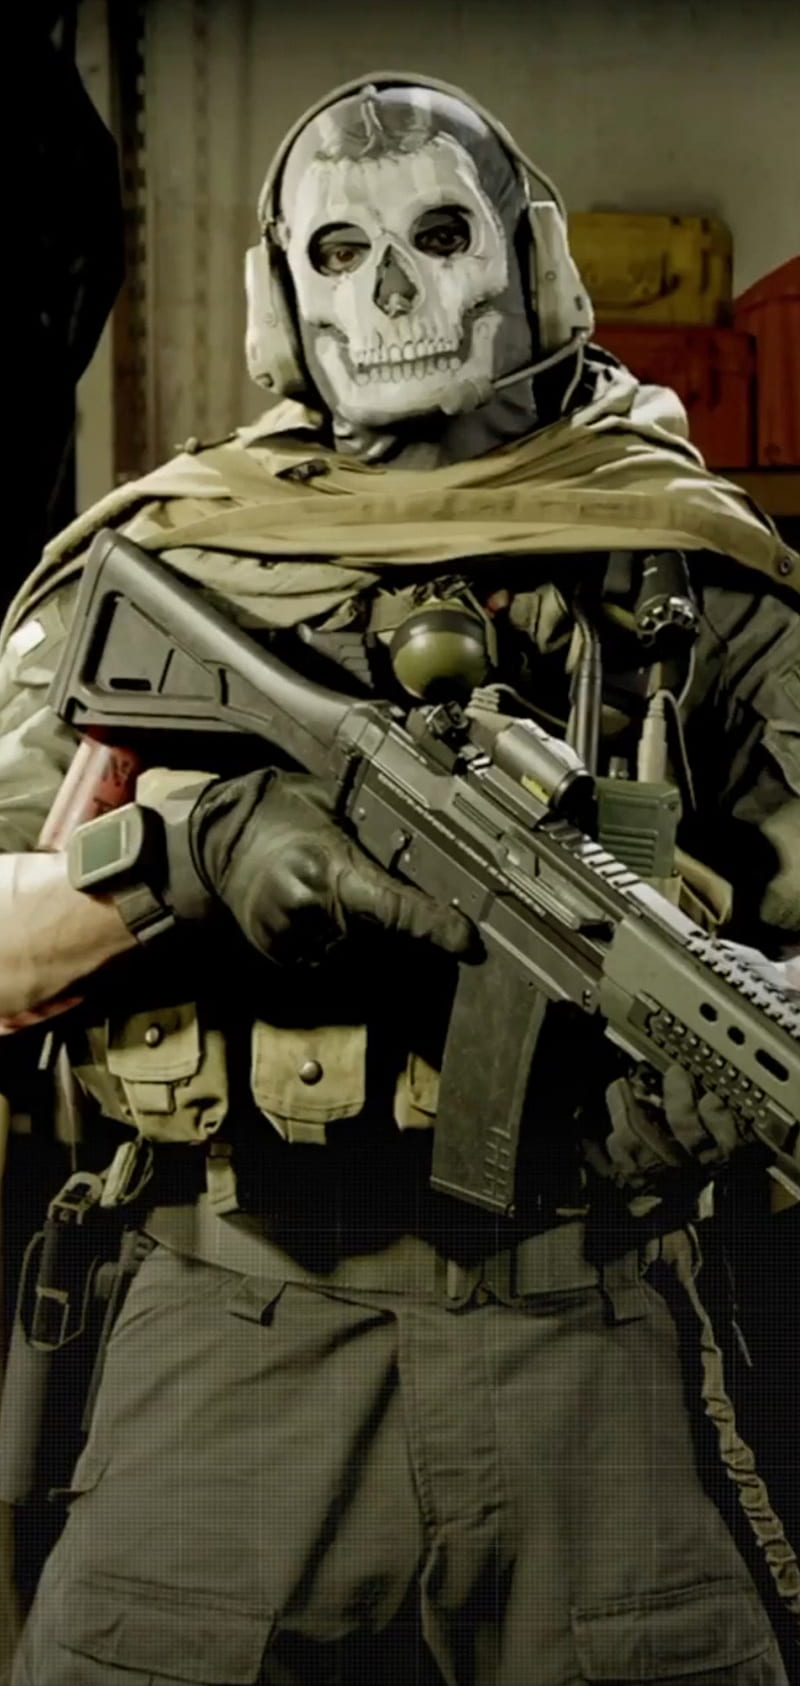 Call of Duty Modern Warfare: Quem é Ghost